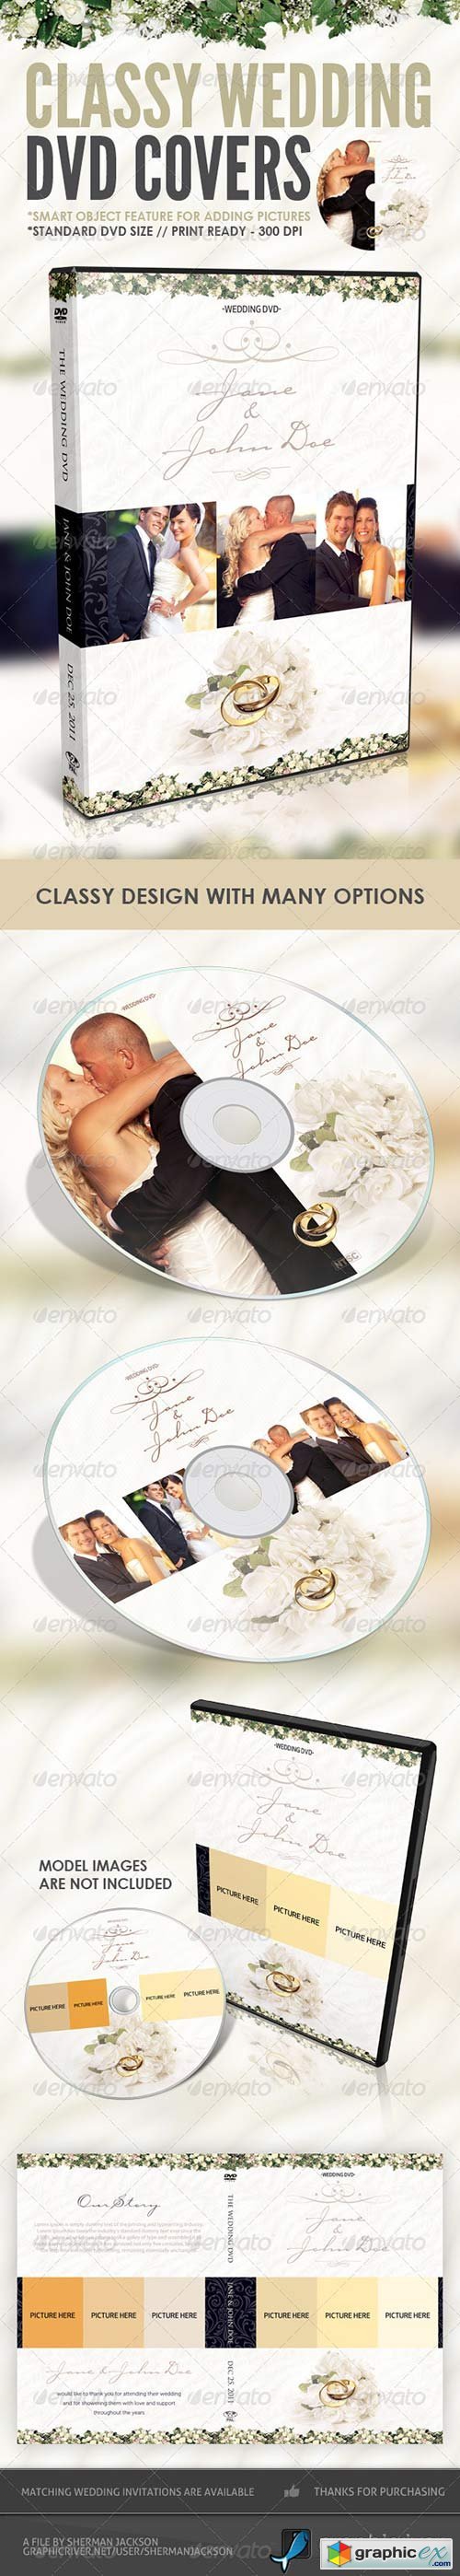 Classy Wedding DVD Covers